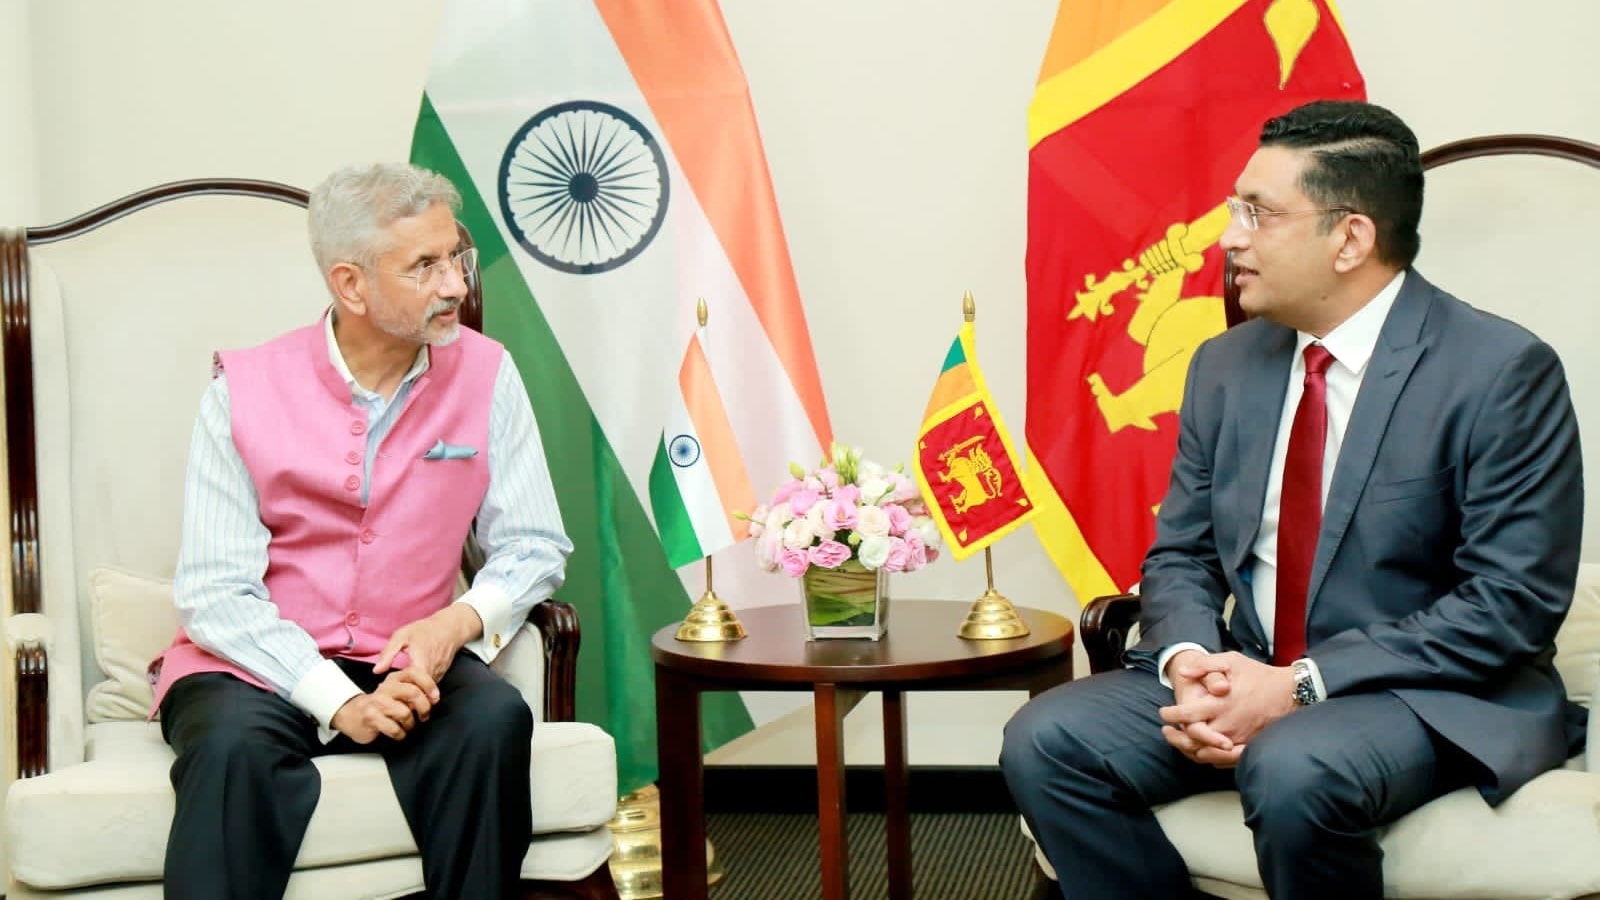 ‘No exaggeration…’: Sri Lanka praises India for aiding in ‘regaining stability’